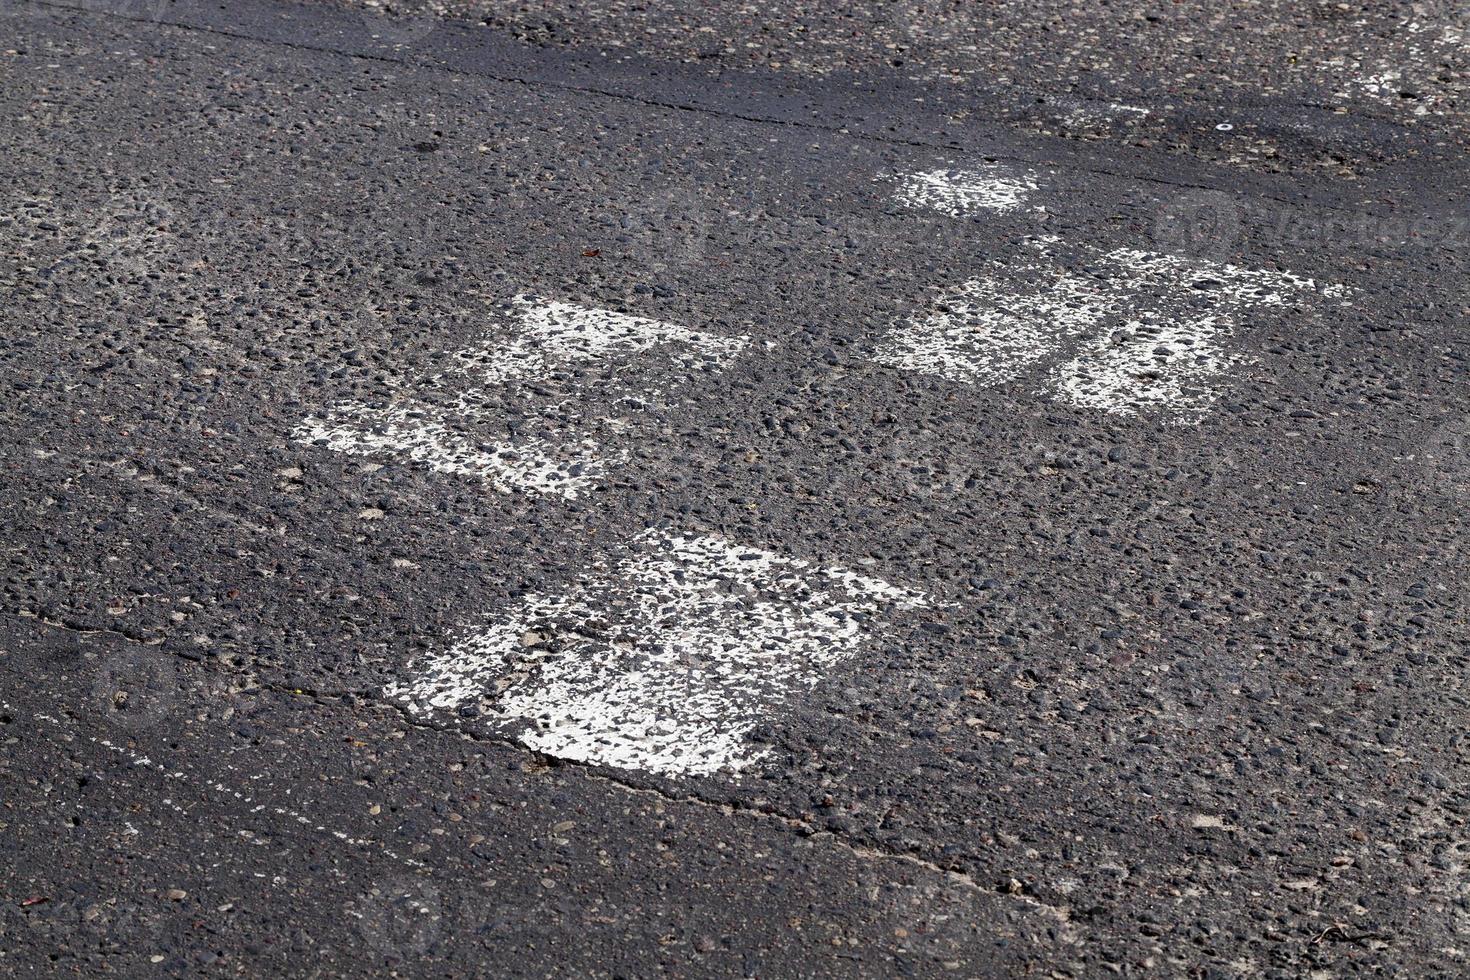 Erased road markings photo